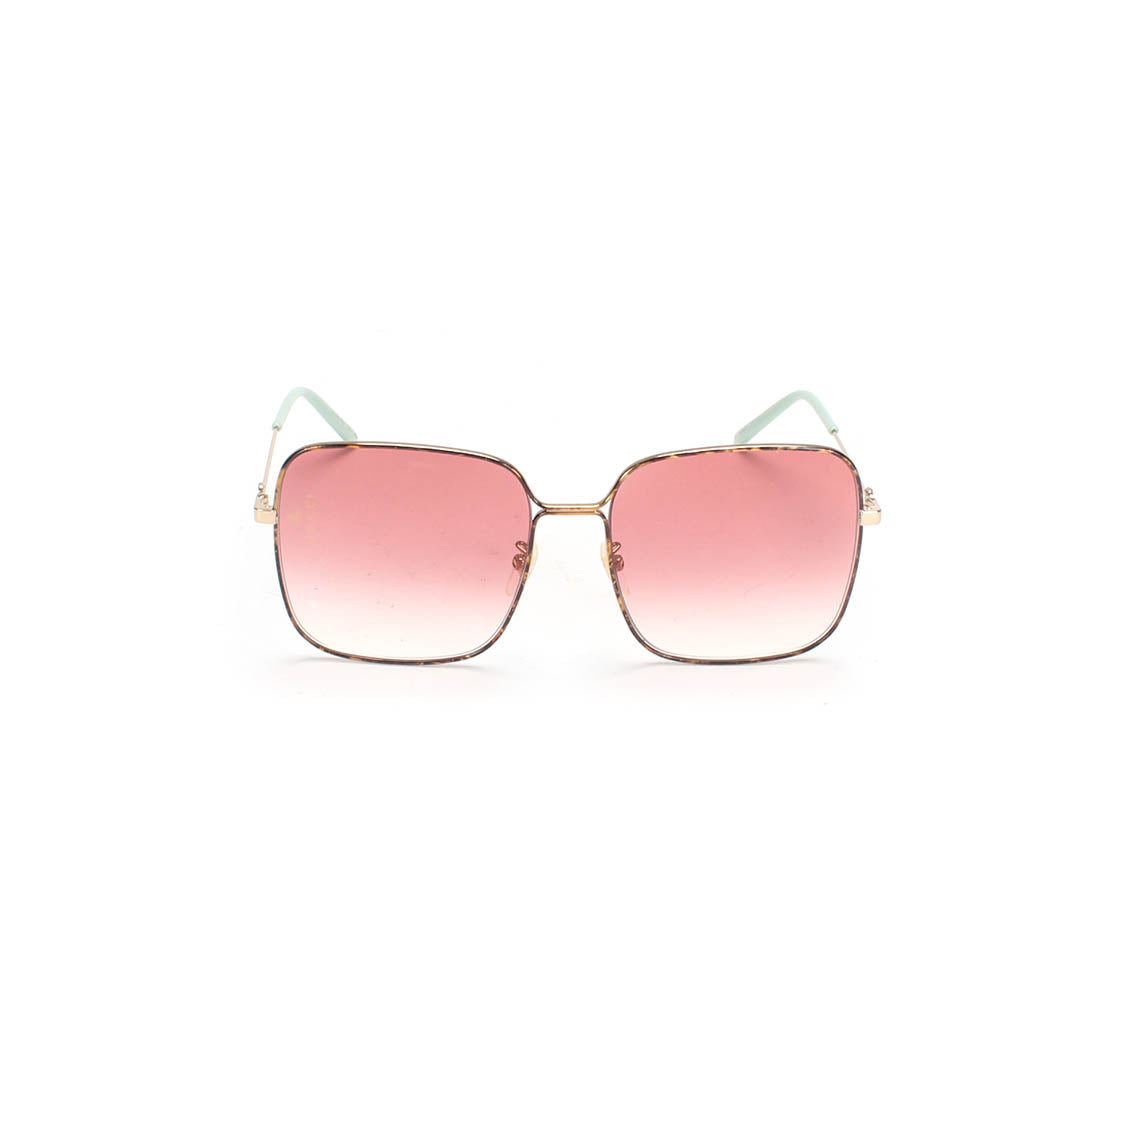 Square Tinted Sunglasses